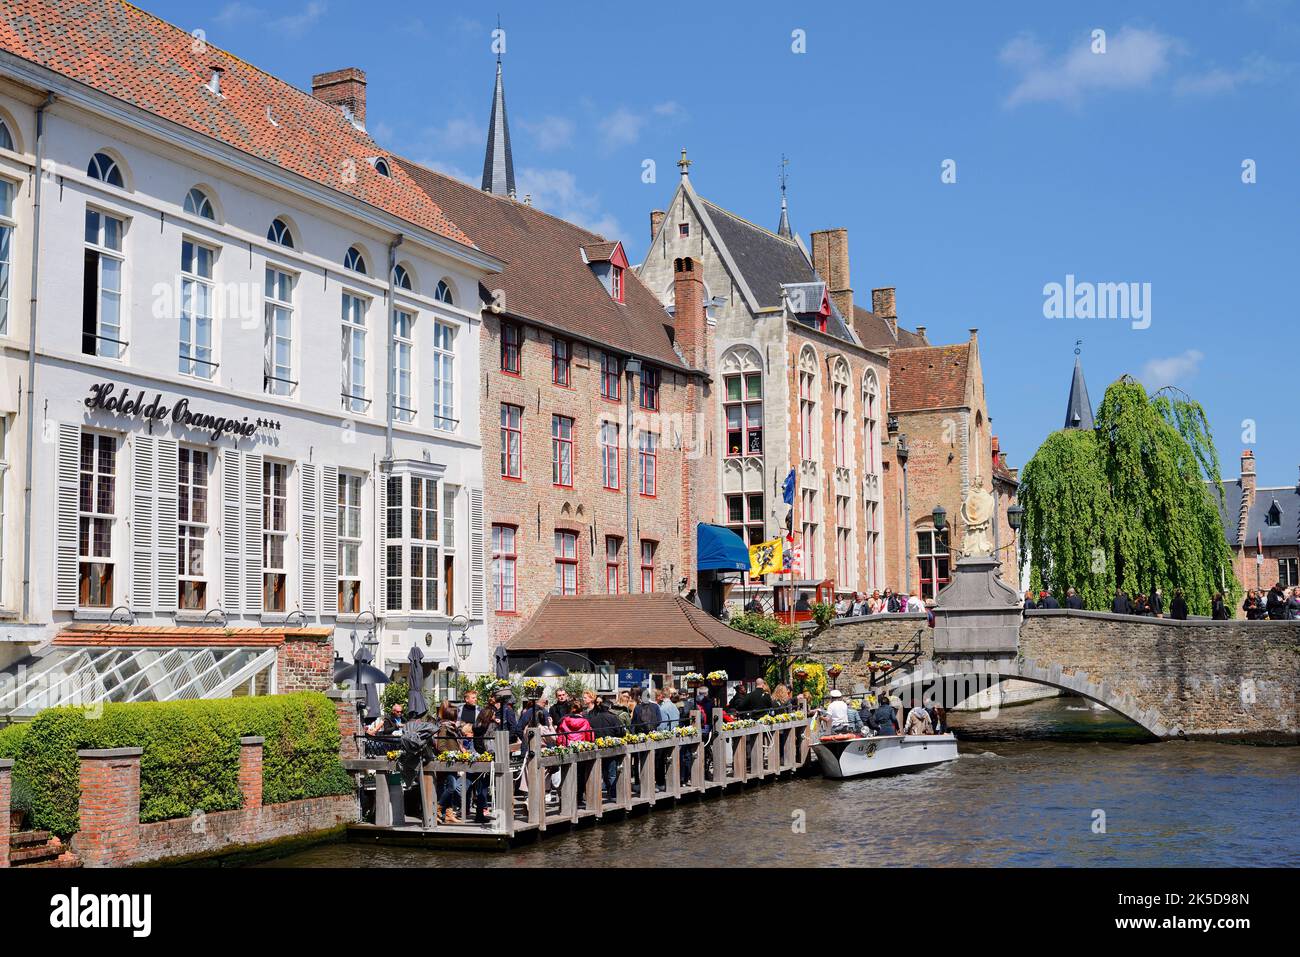 Ristorante e ponte Nepomuk, Dijver, Bruges, Fiandre Occidentali, Fiandre, Belgio Foto Stock